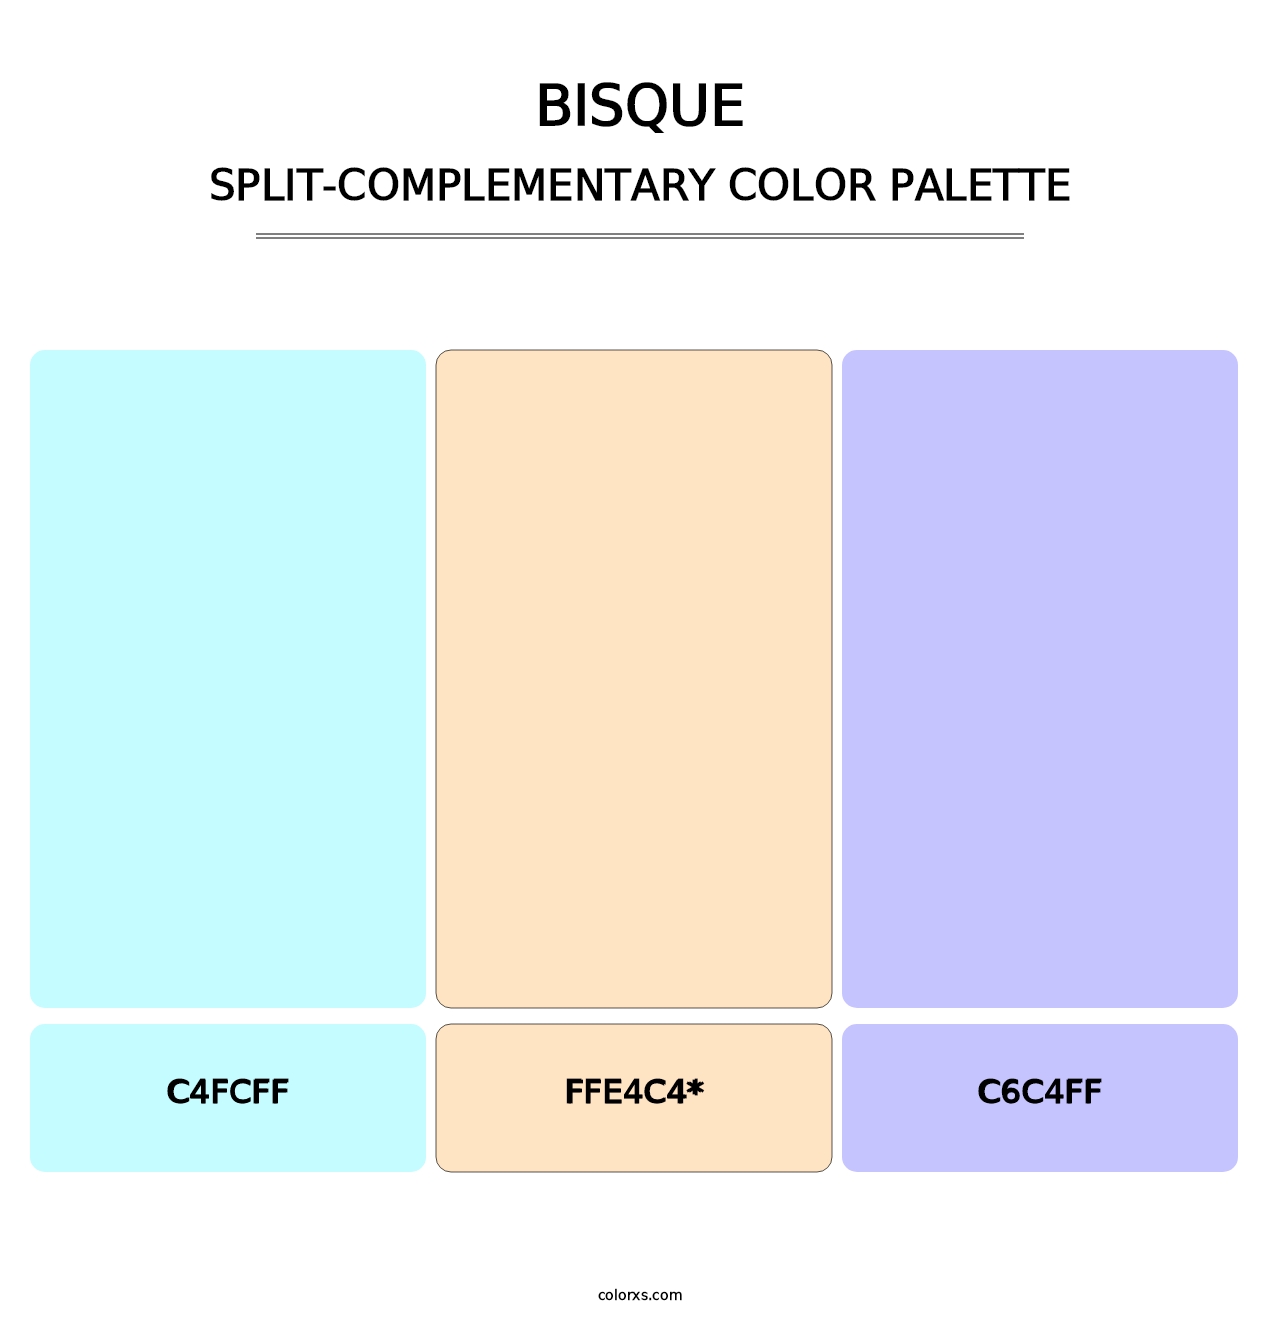 Bisque - Split-Complementary Color Palette